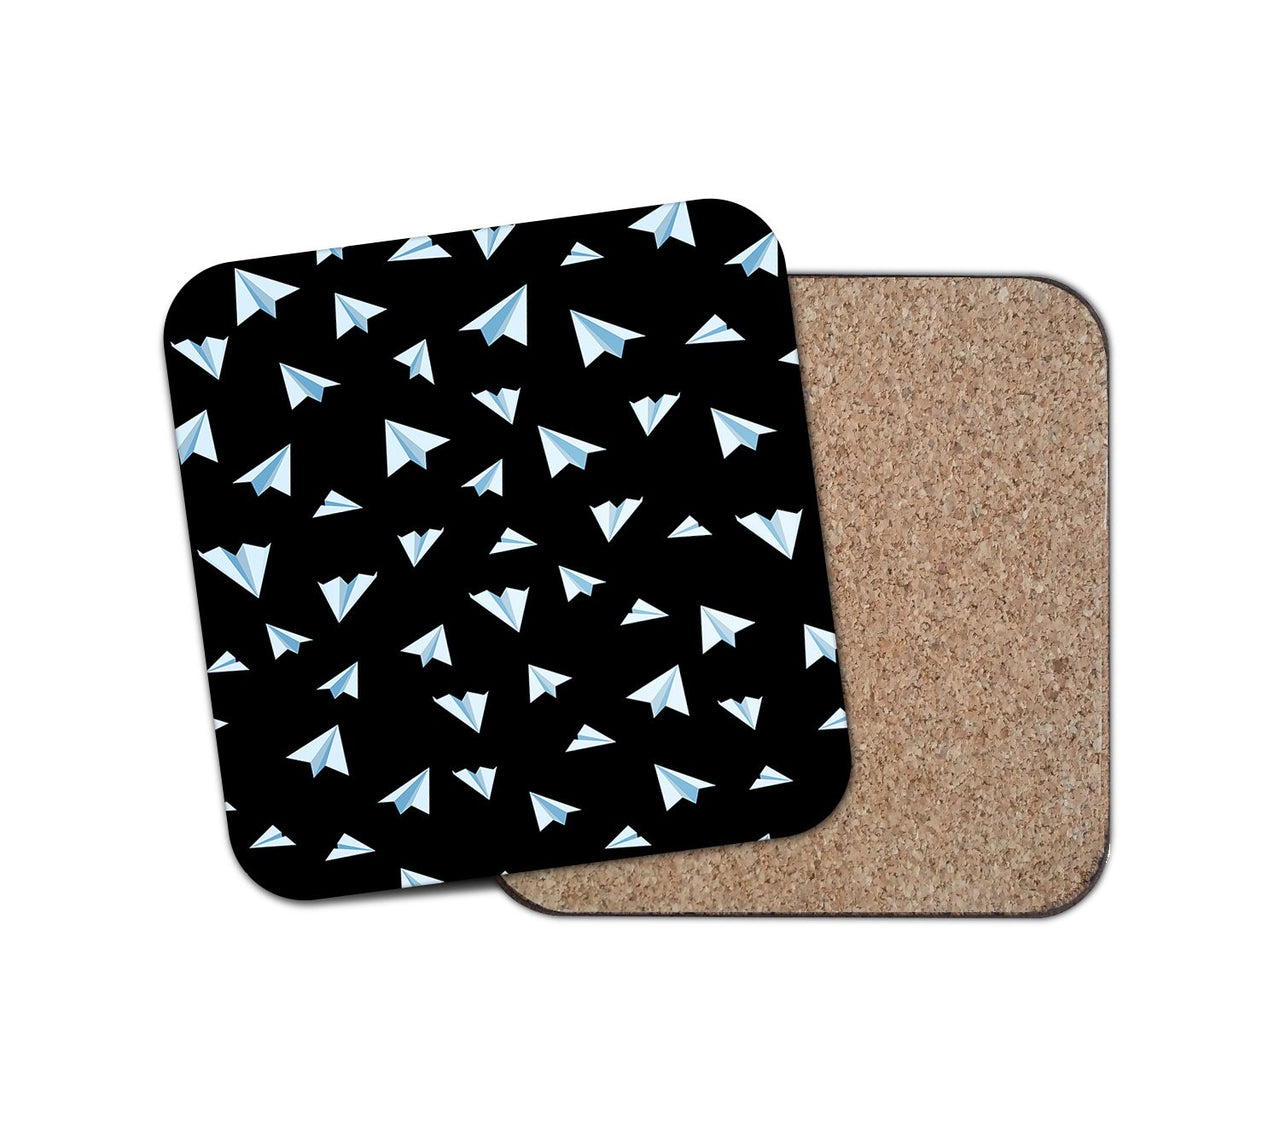 Paper Airplanes (Black) Designed Coasters